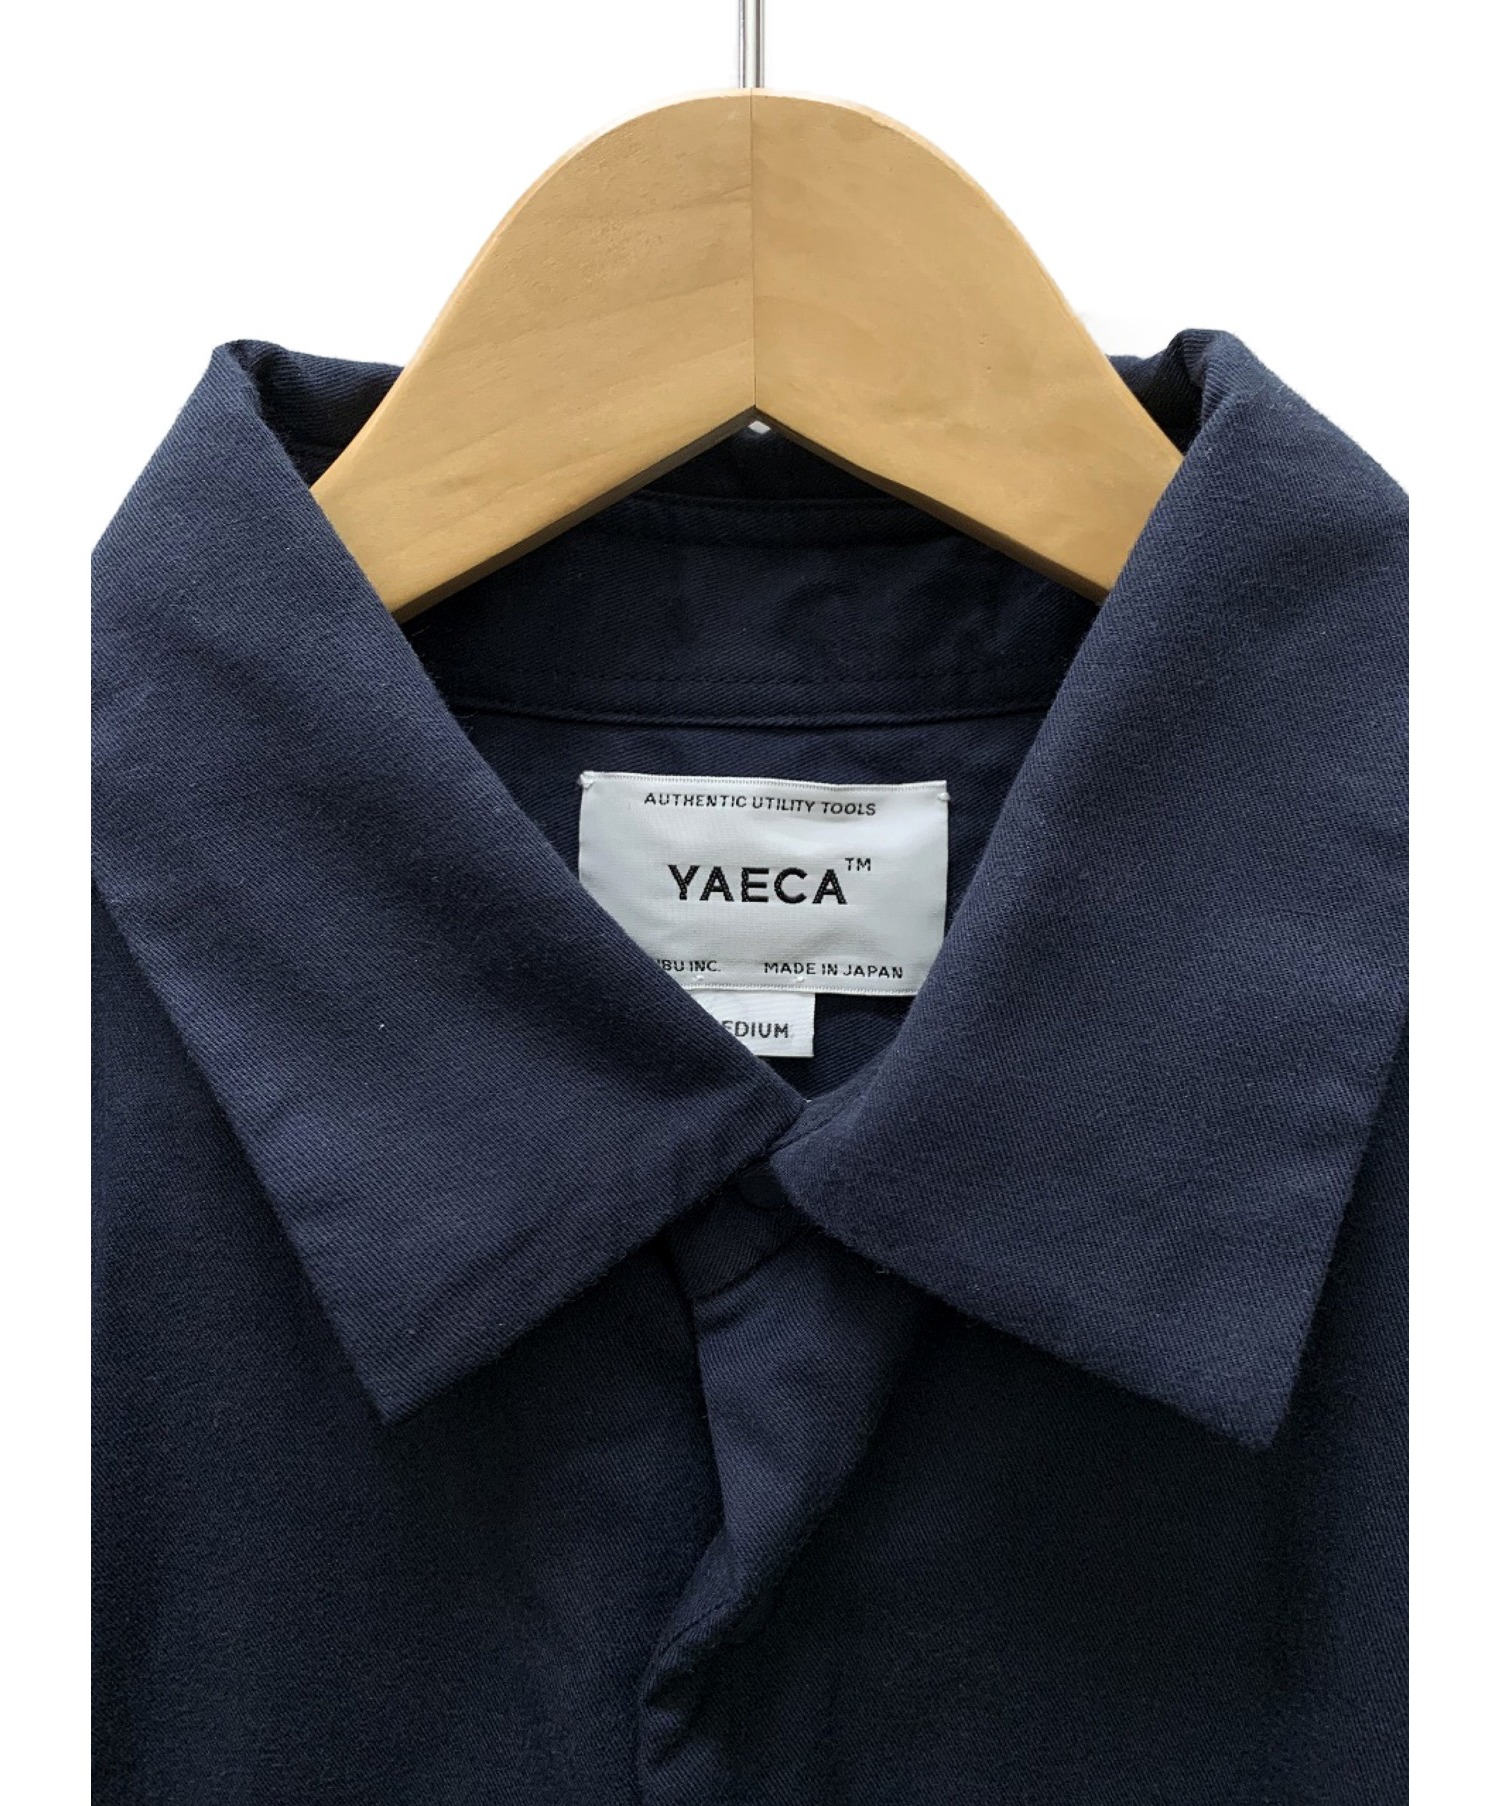 YAECA (ヤエカ) 中綿コーチシャツジャケット ネイビー サイズ:SIZE M